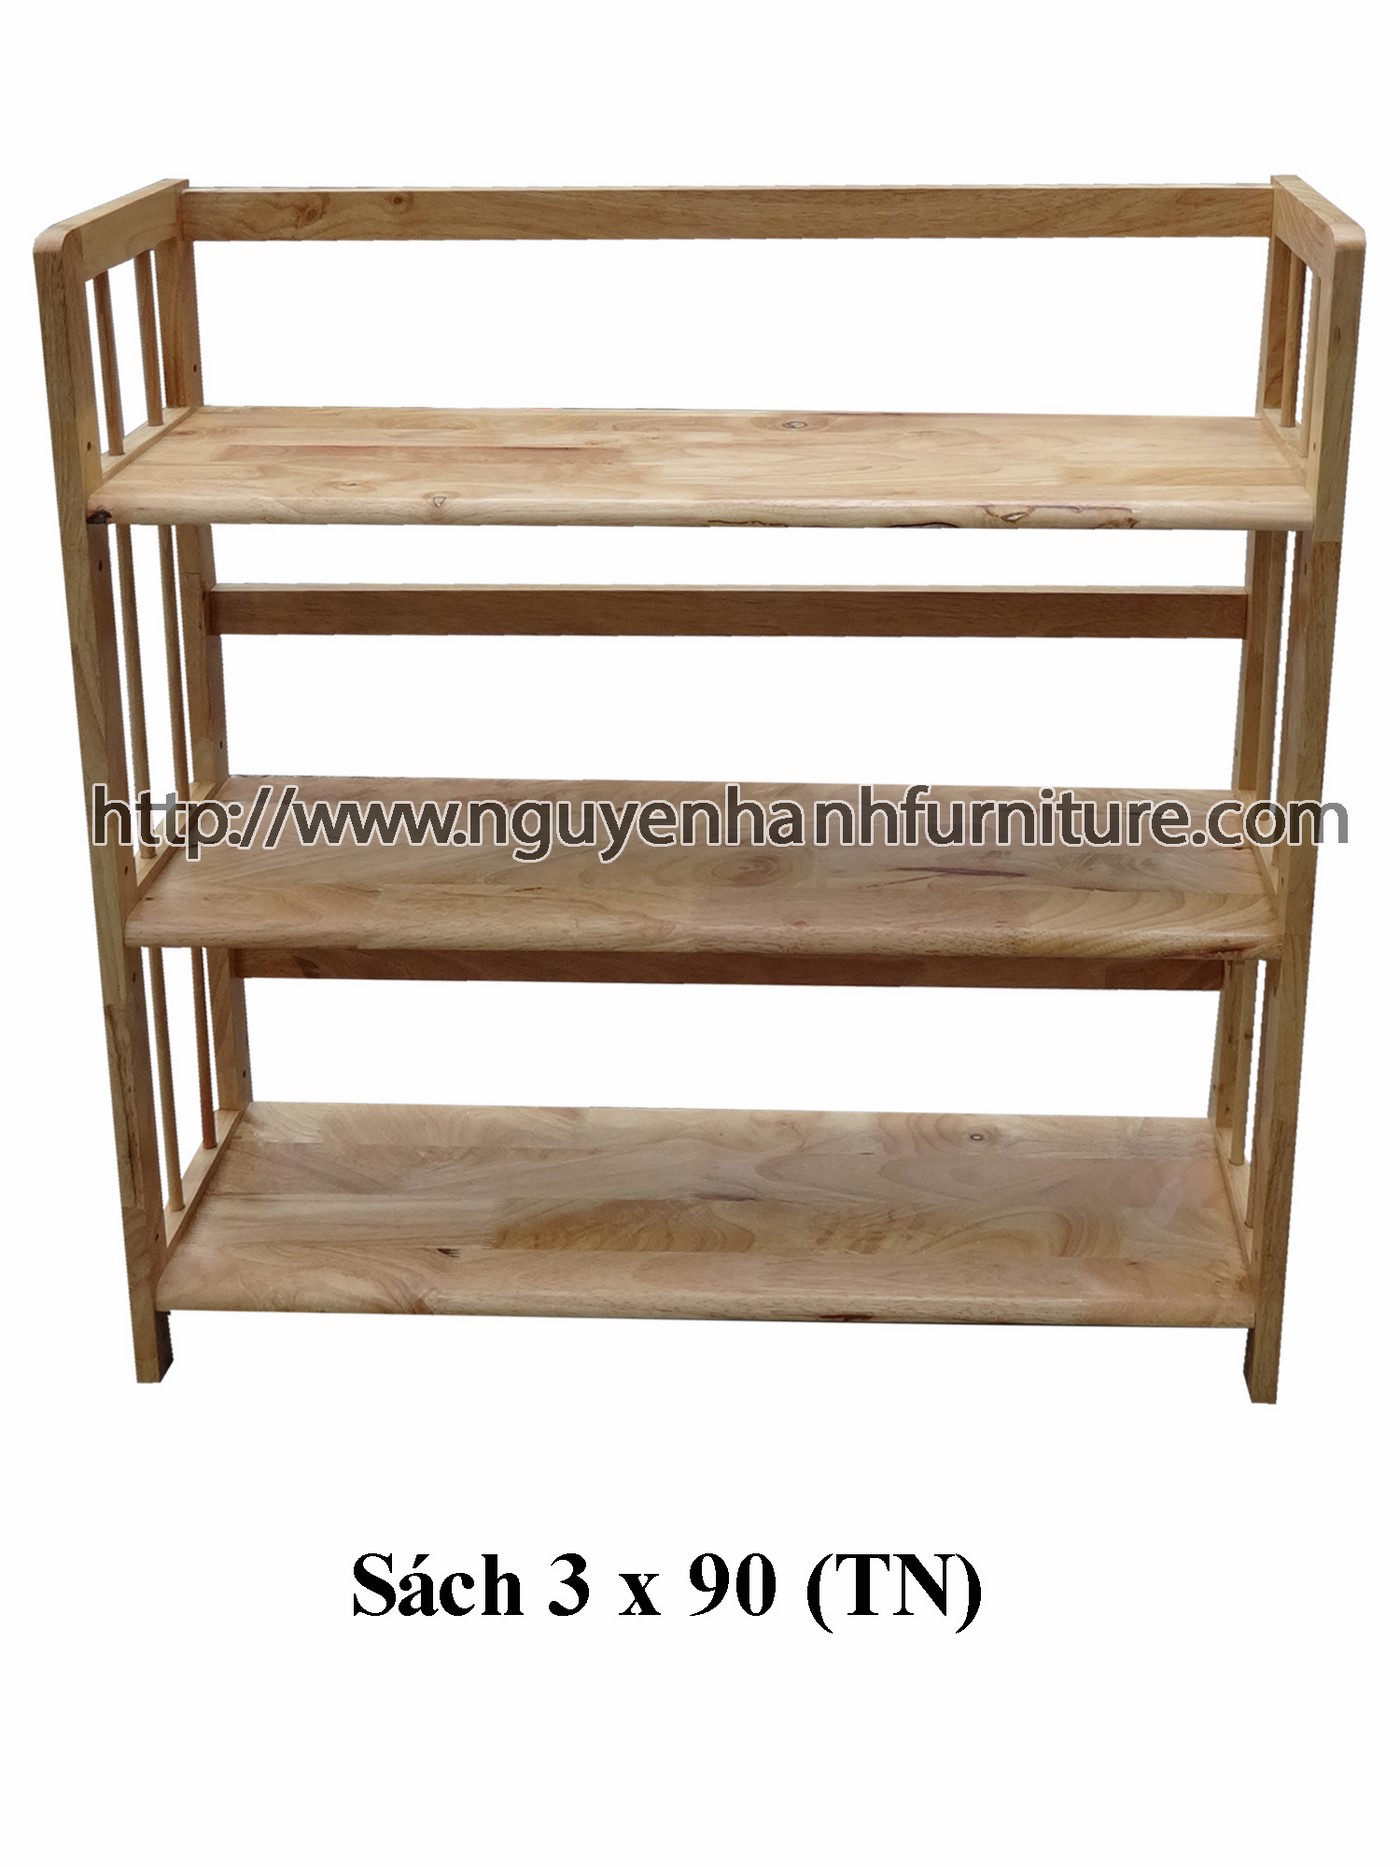 Name product: Triple storey Adjustable Bookshelf 90 (Natural) - Dimensions: 93 x 28 x 90 (H) - Description: Wood natural rubber